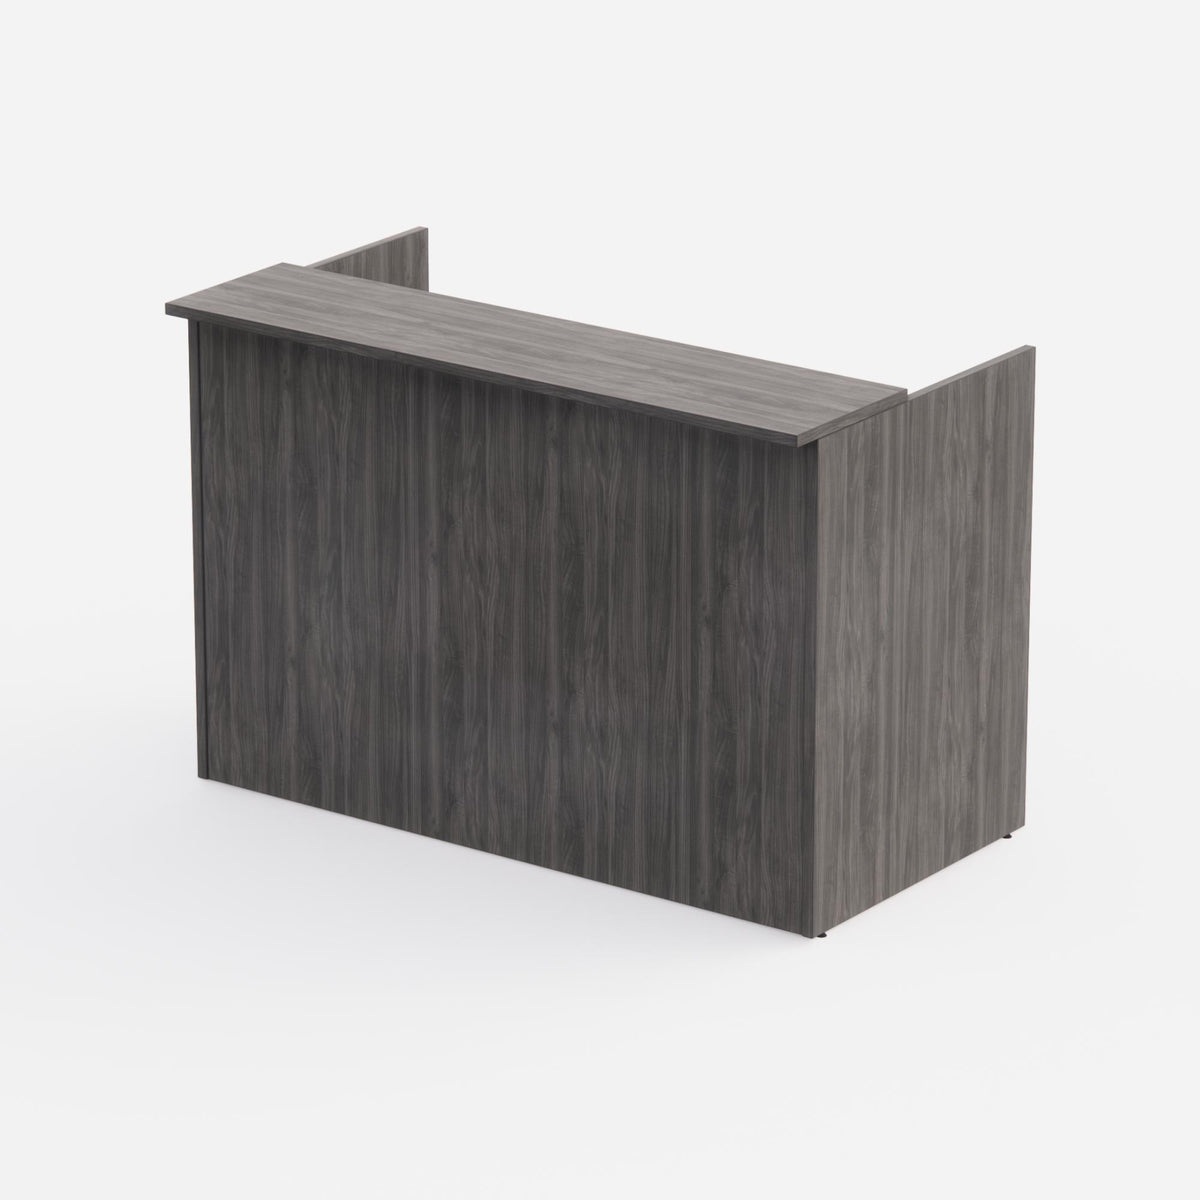 Sheridan 5-Ft. Reception Desk with Rectangular Laminate Counter and Locking Hanging Box/File Pedestal Drawers, 60